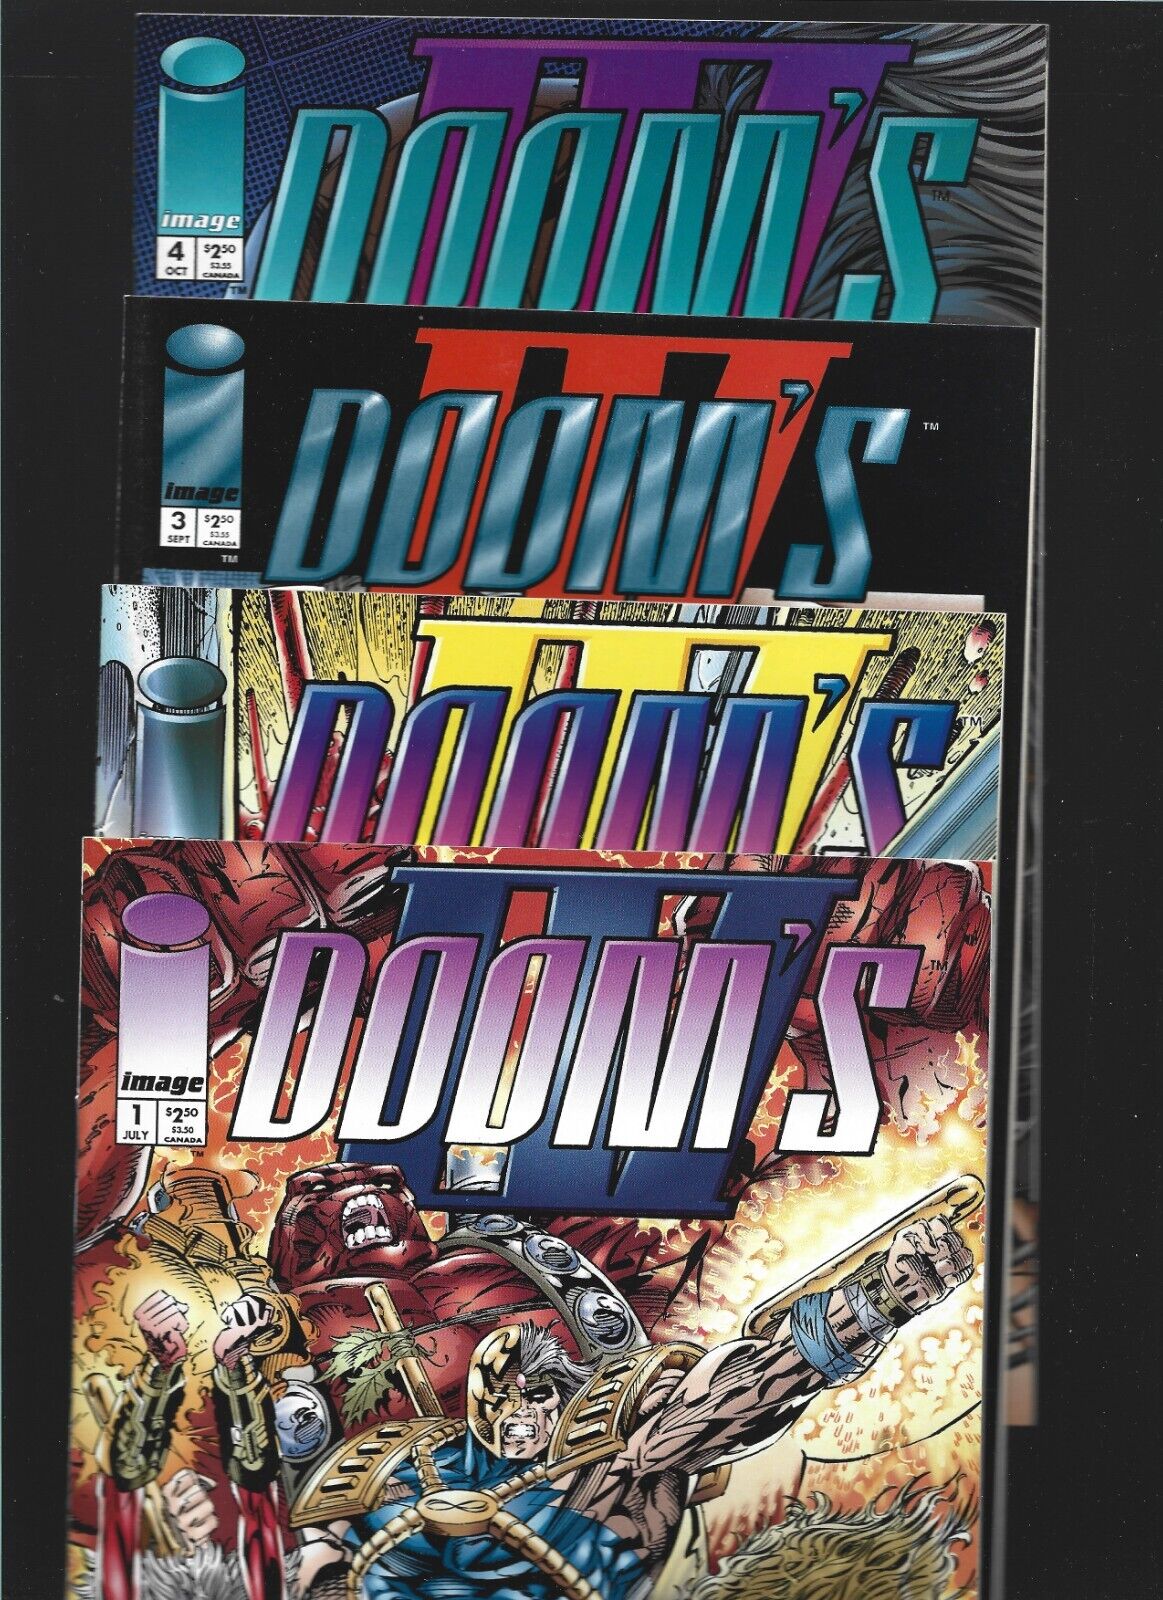 IMAGE COMICS - Doom's IV #1-4 complete set